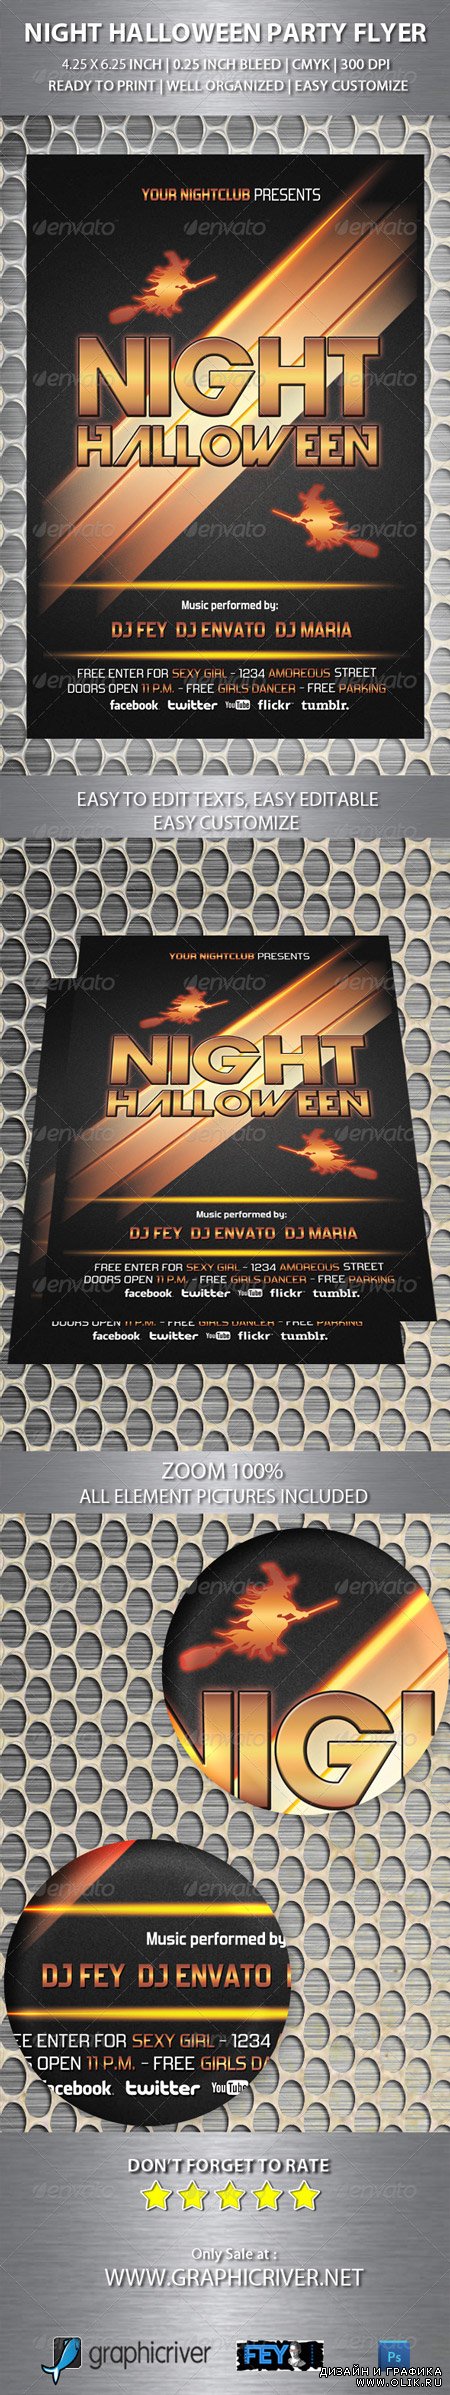 PSD - Night Halloween Party Flyer